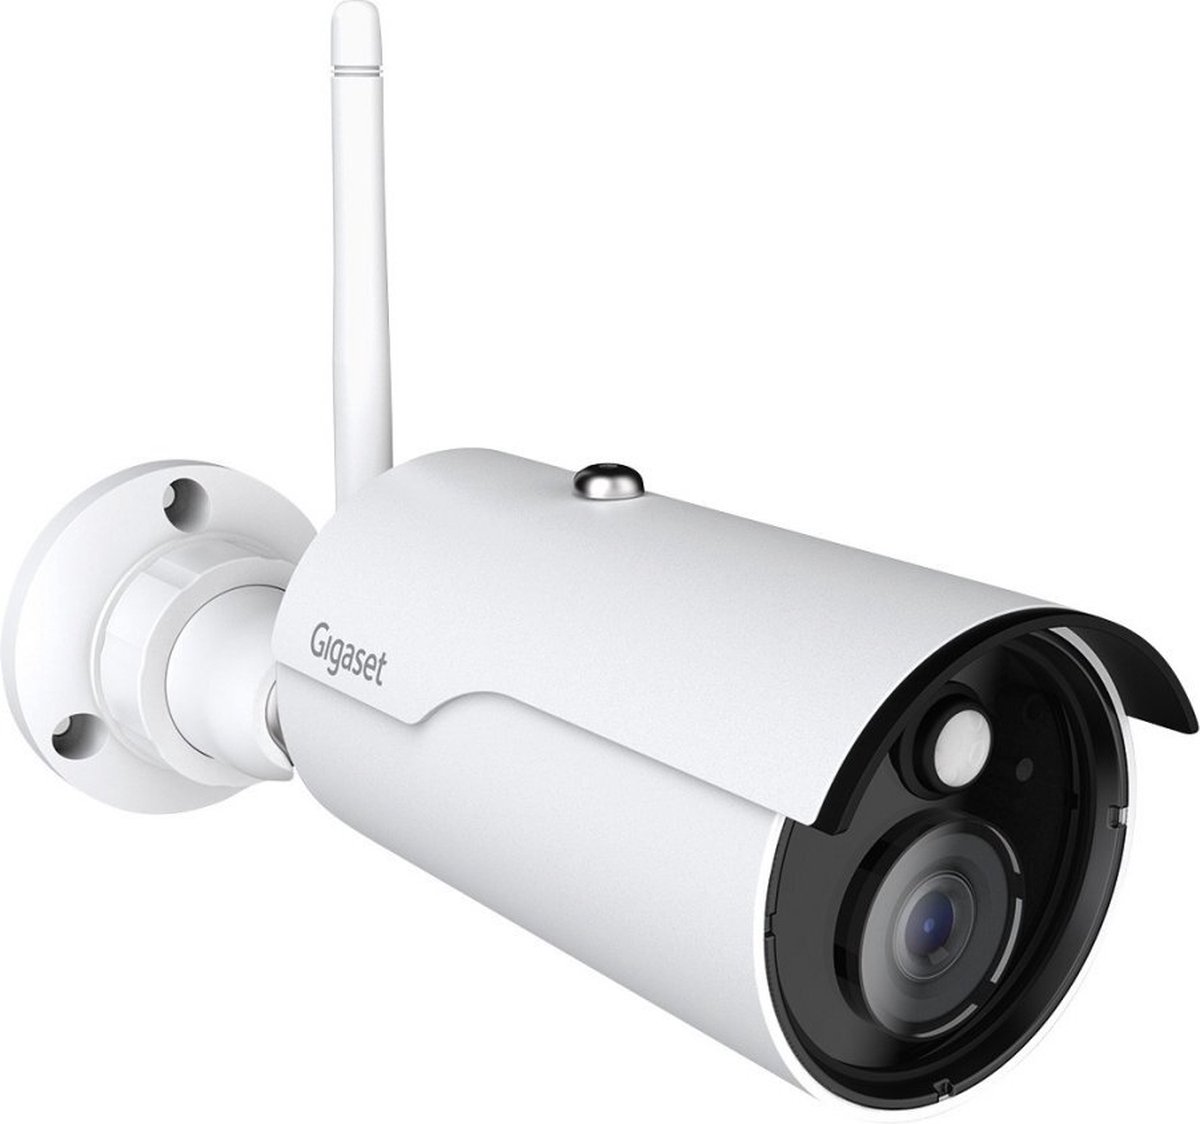 Gigaset Outdoor Smart Camera - IP camera - Full HD (1920x1080p) Real Time view - Gratis handmatig opnemen - Nachtzicht tot 15m - Wit